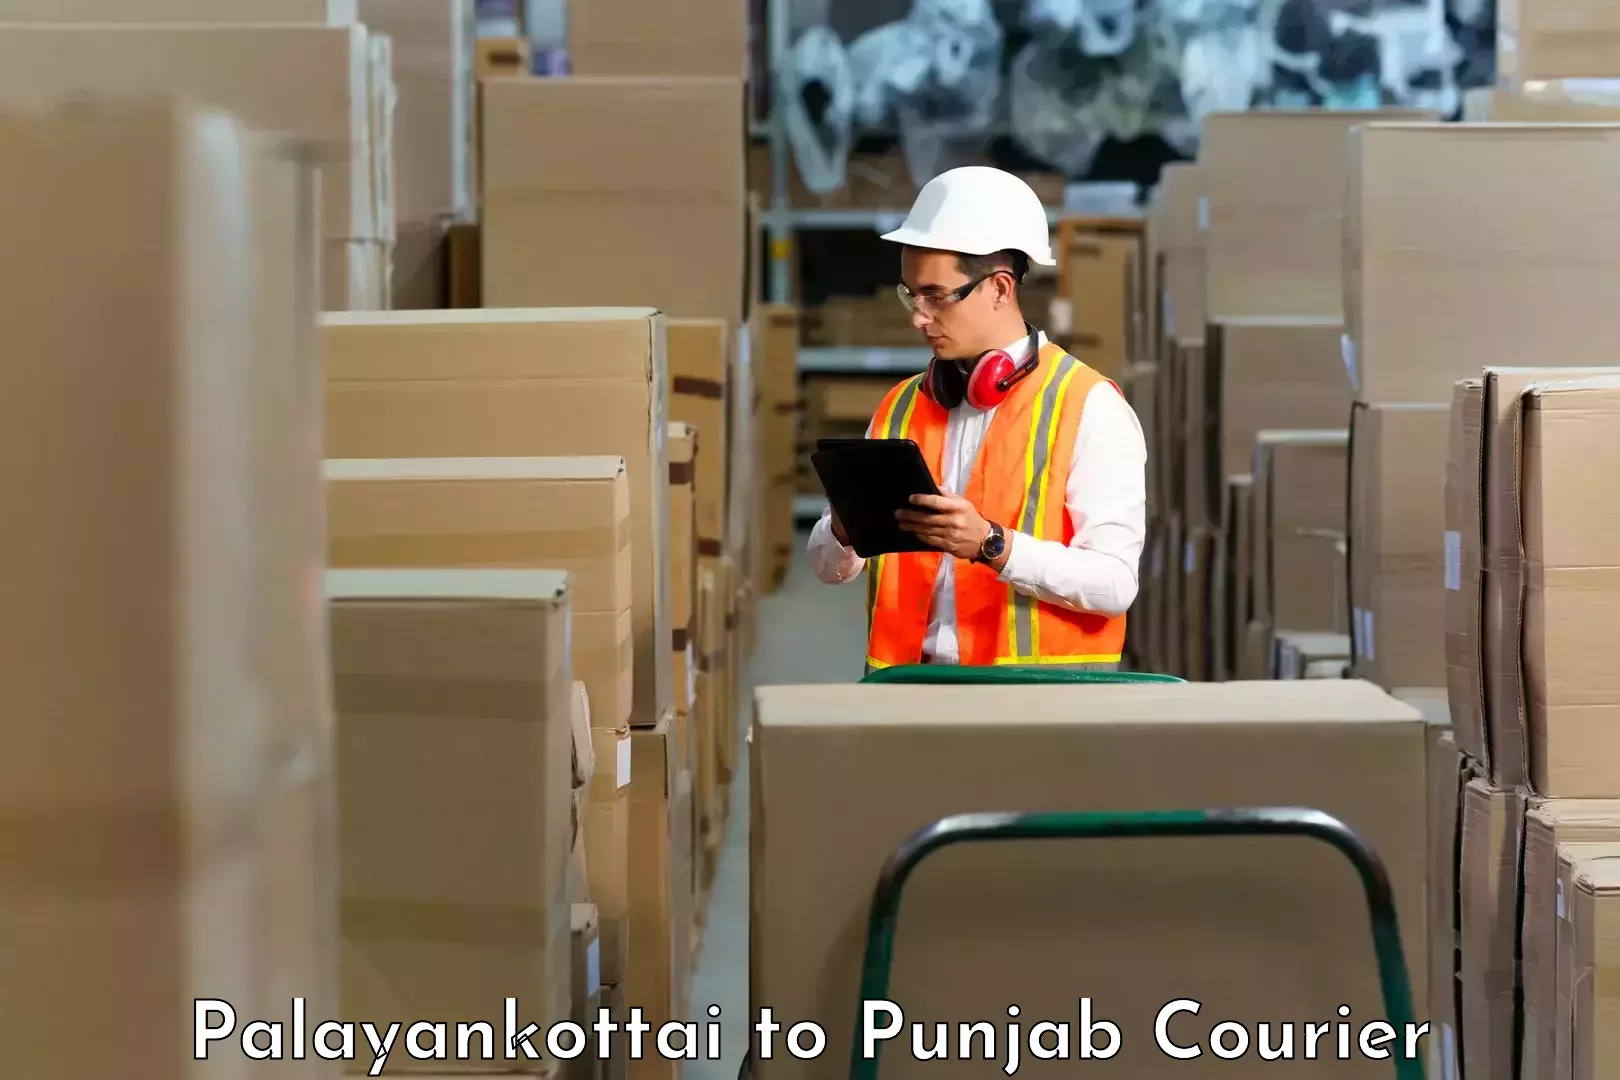 Courier service comparison Palayankottai to Punjab